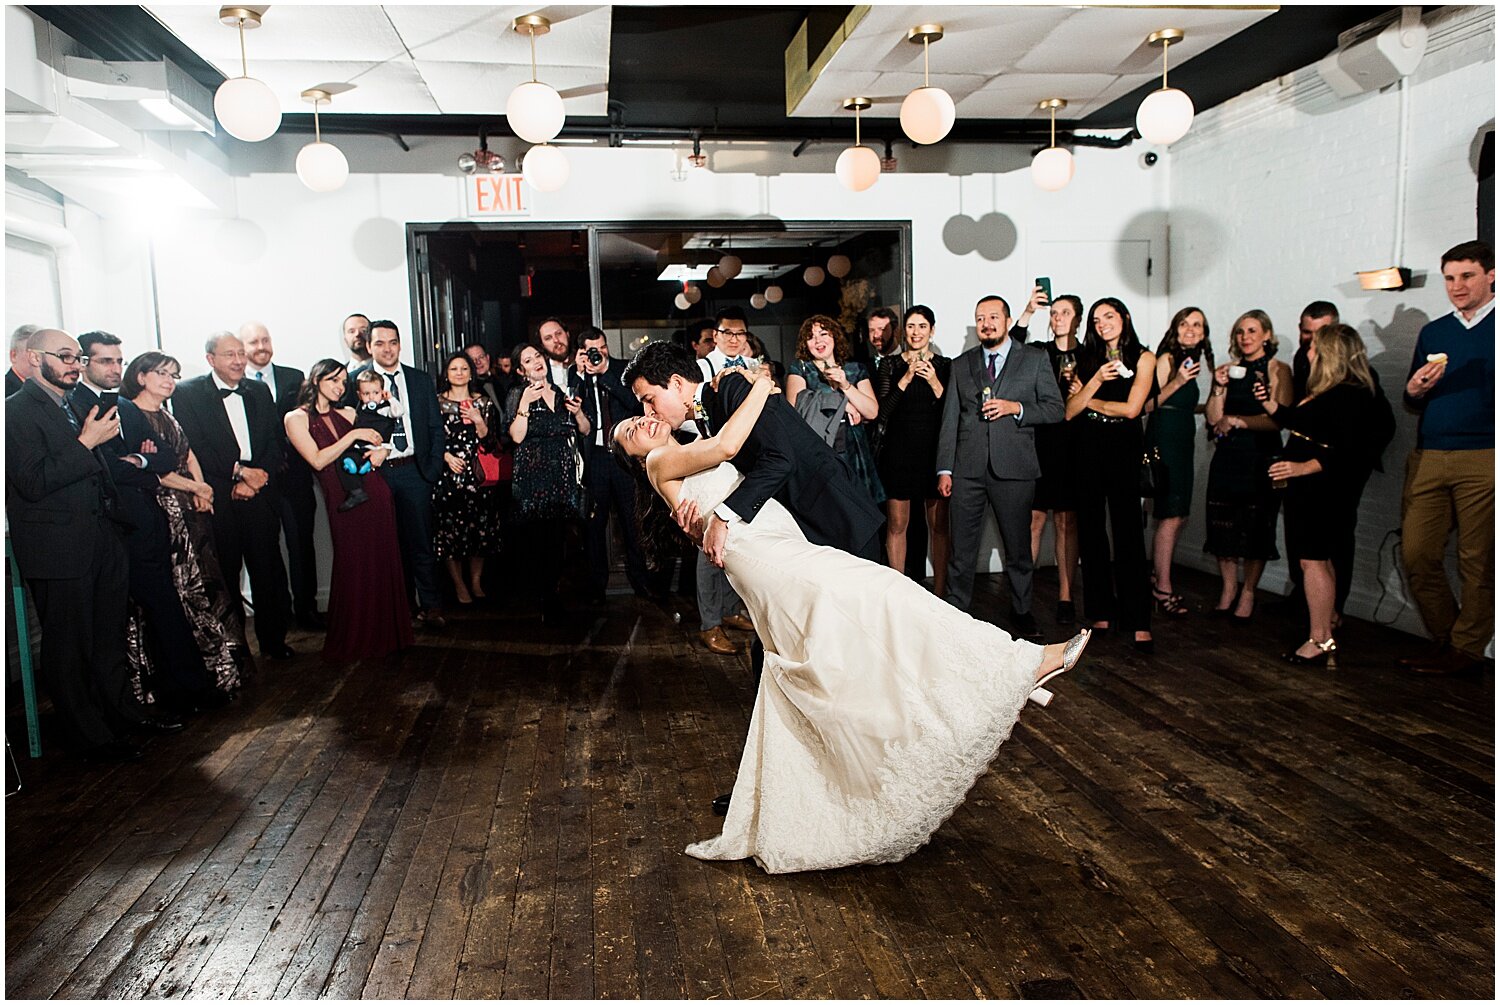 Havens-Kitchen-Wedding-Venue-NYC-Apollo-Fields-Weddings-Photographers-New-York-City-106.jpg